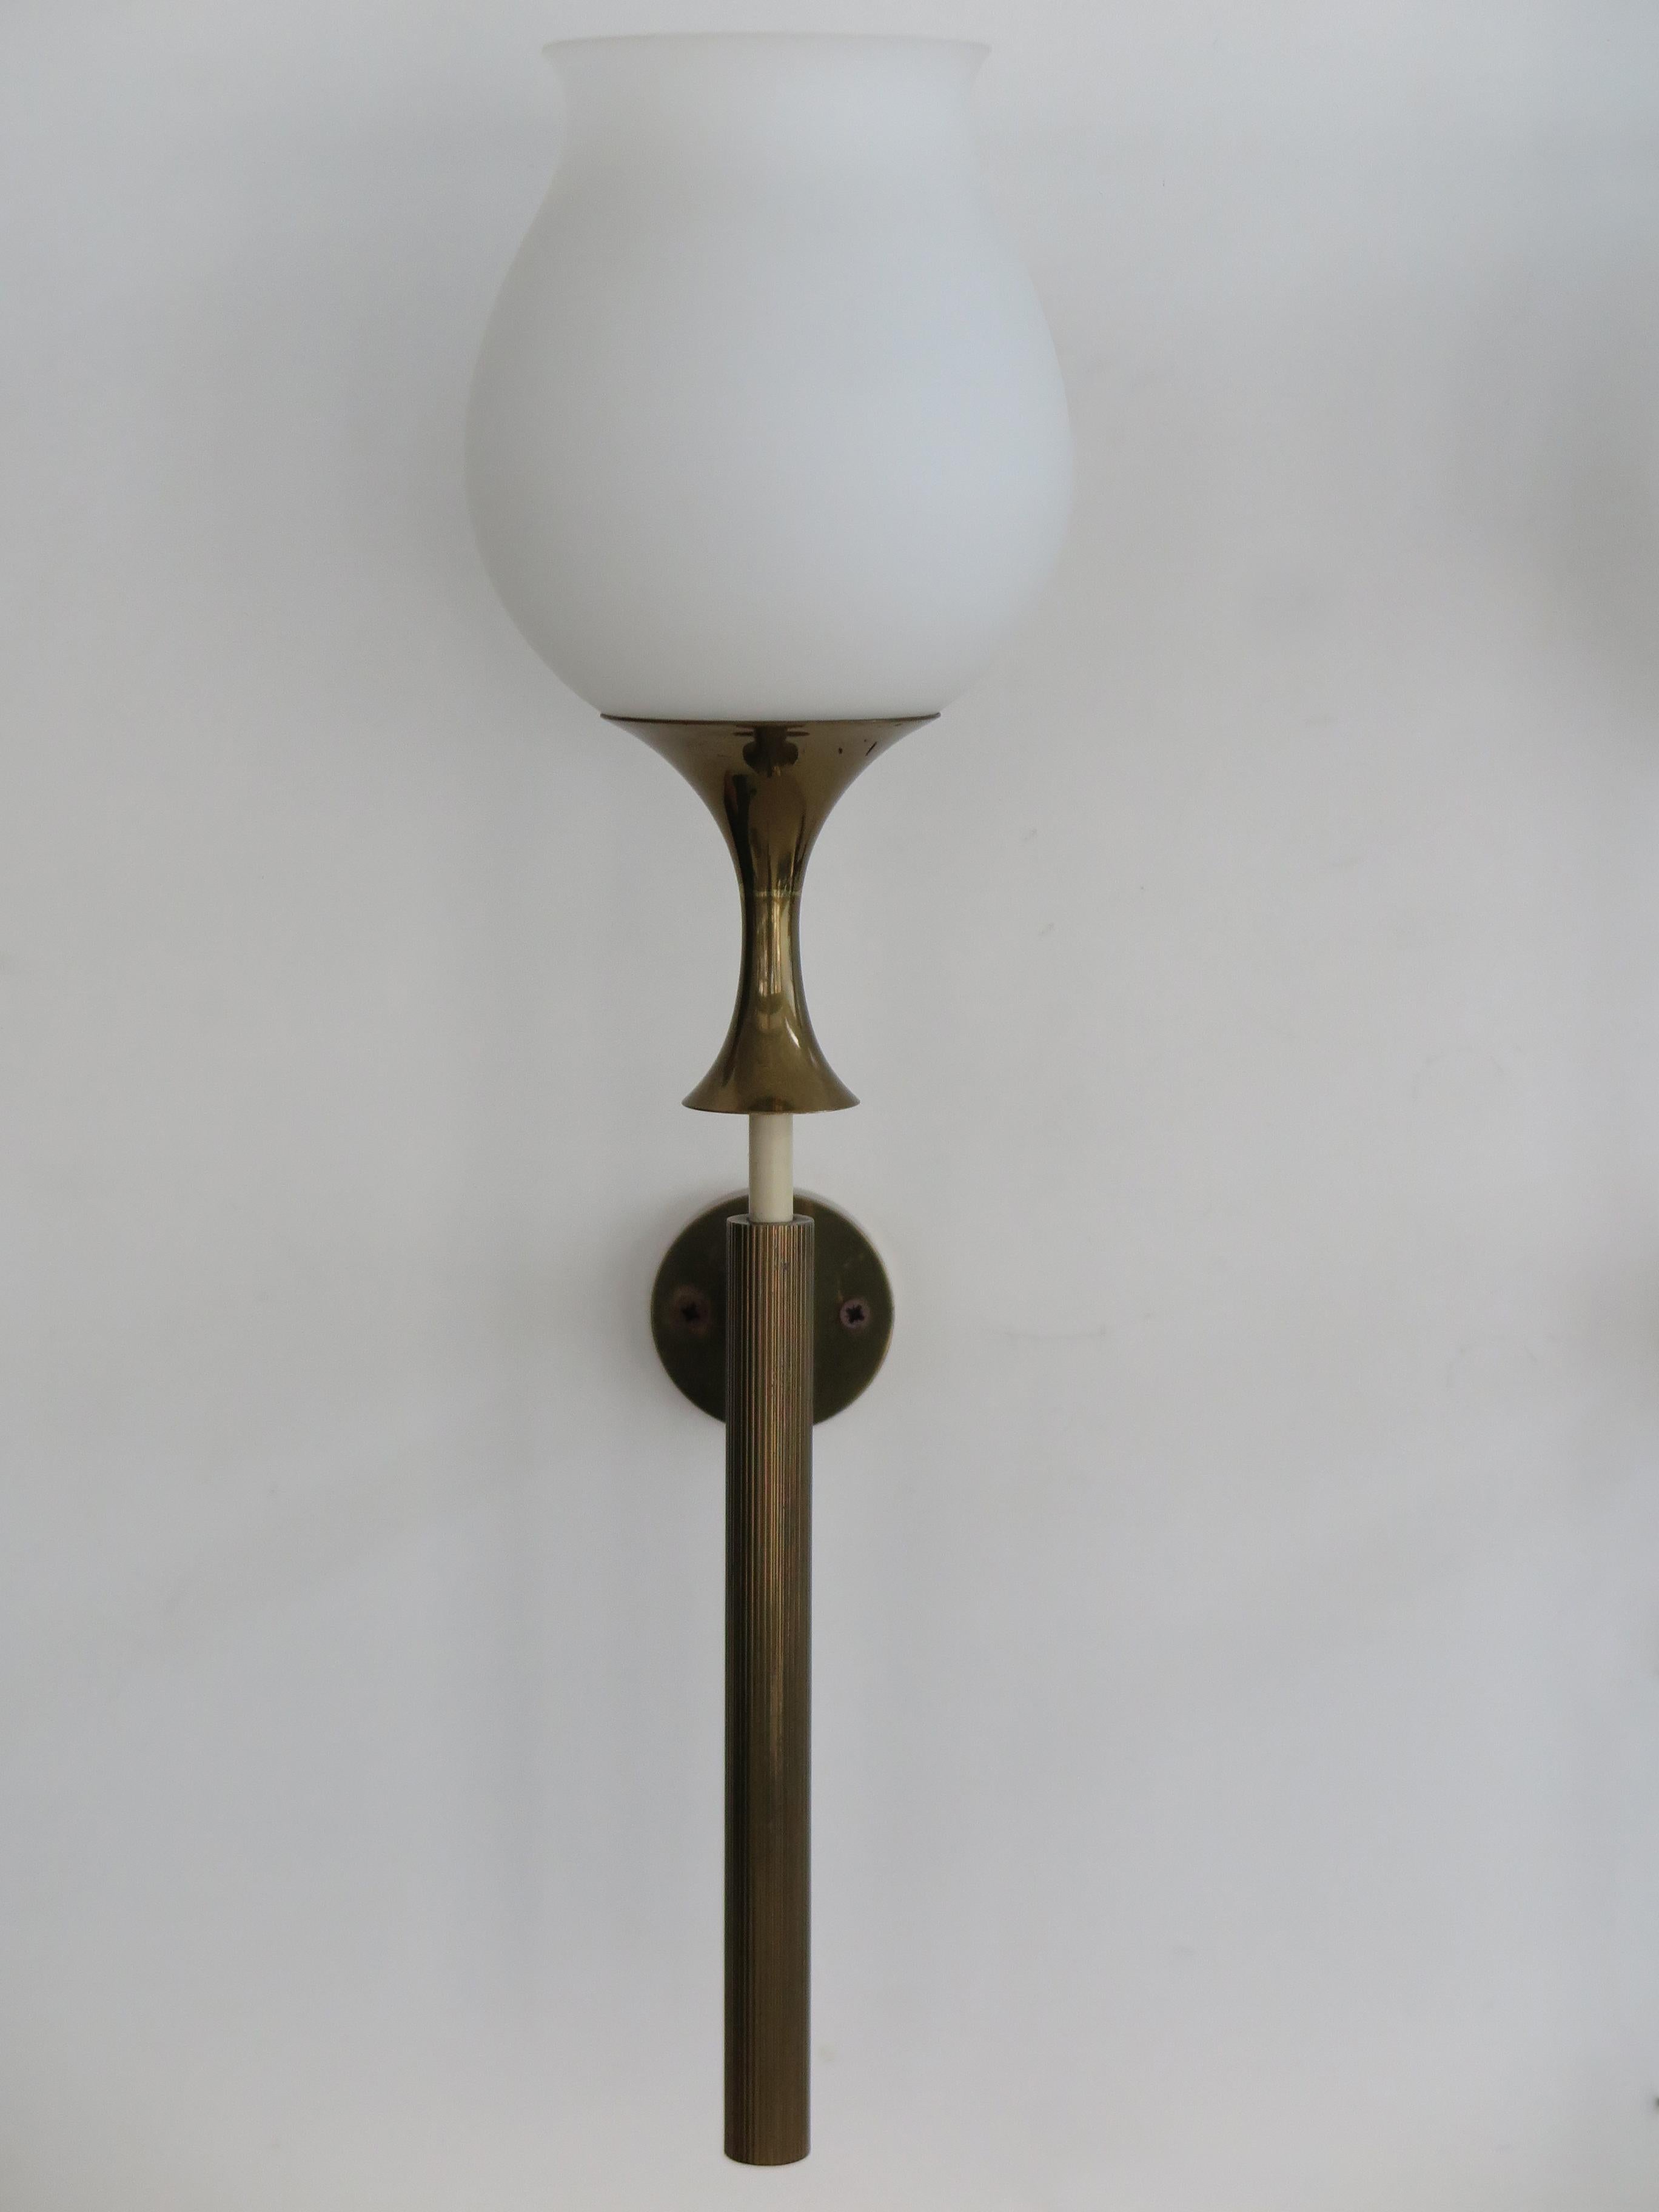 Angelo Lelii Italian Midcentury Glass Brass Sconces Wall Lamps Arredoluce 1950s For Sale 2